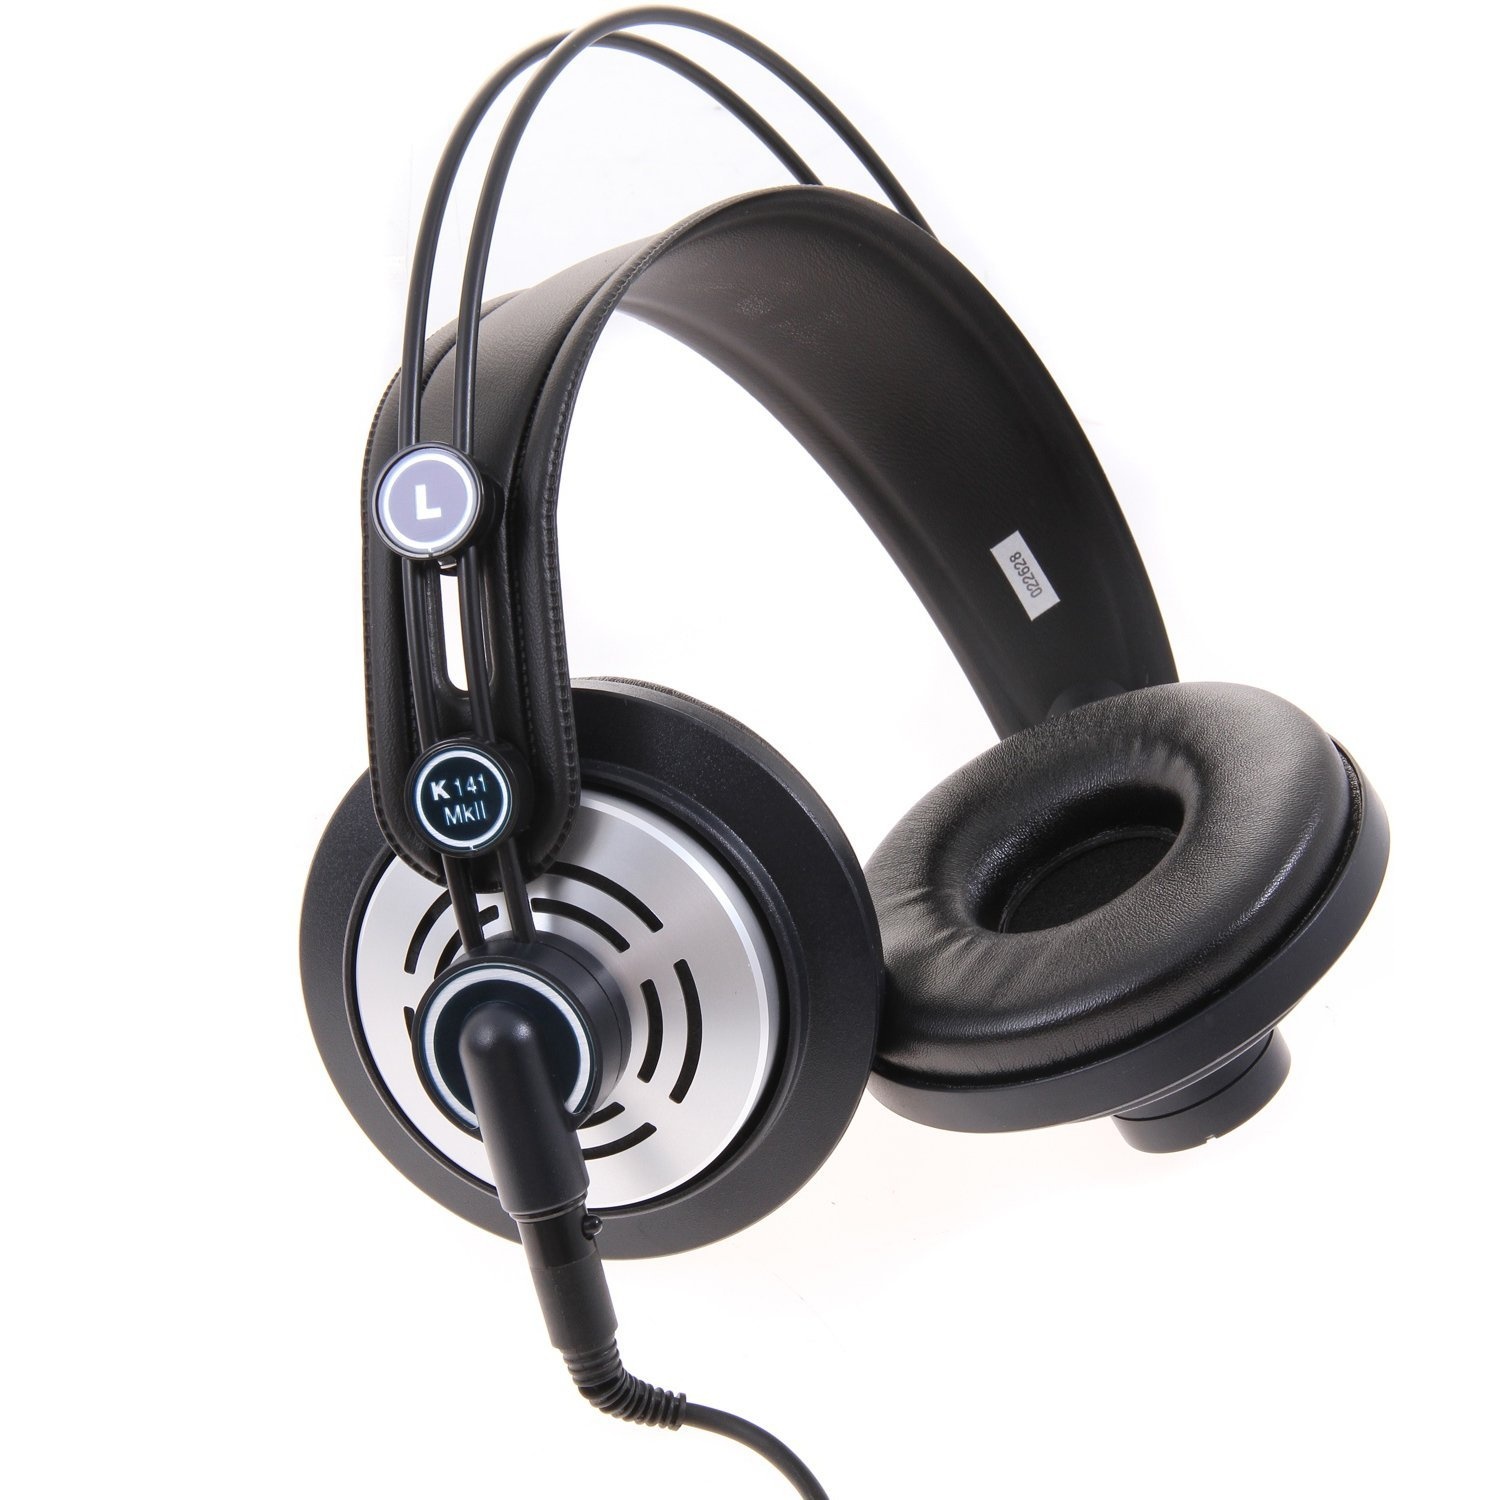 AKG Professional Studio Headphones K141-MKII